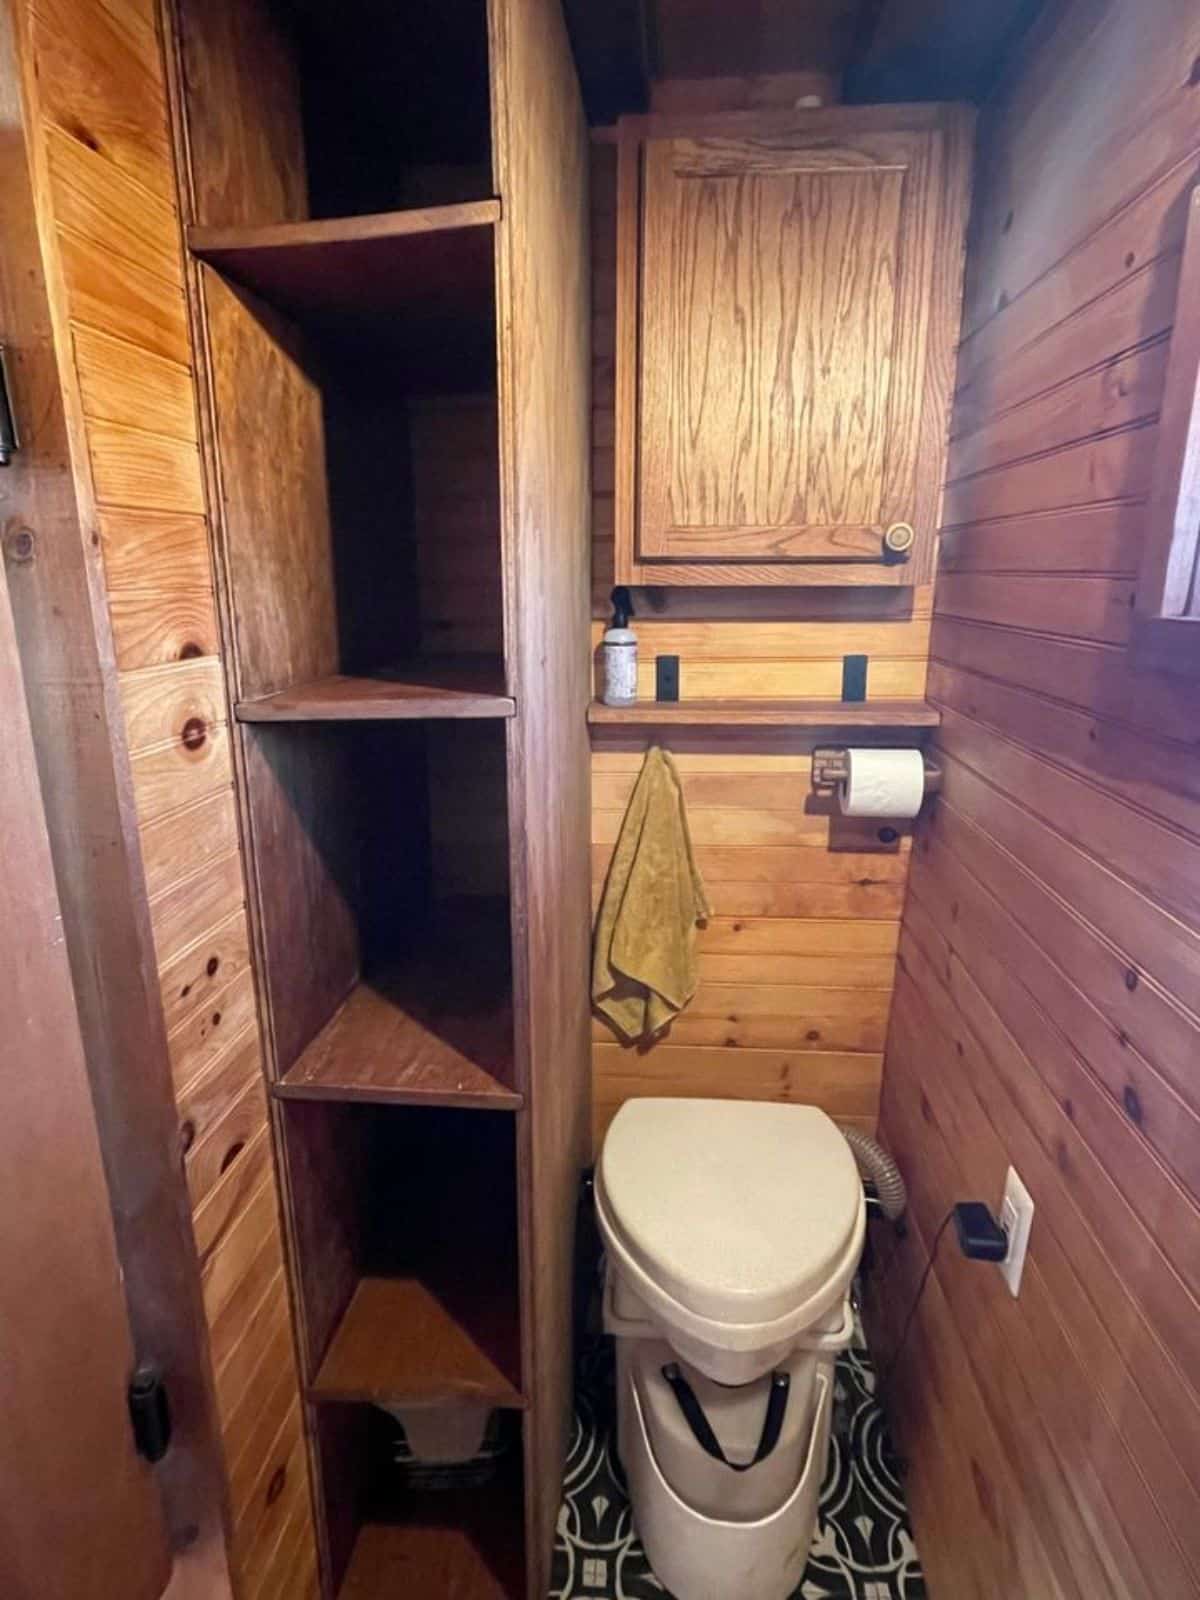 bathroom of custom tiny home has all the standard fittings